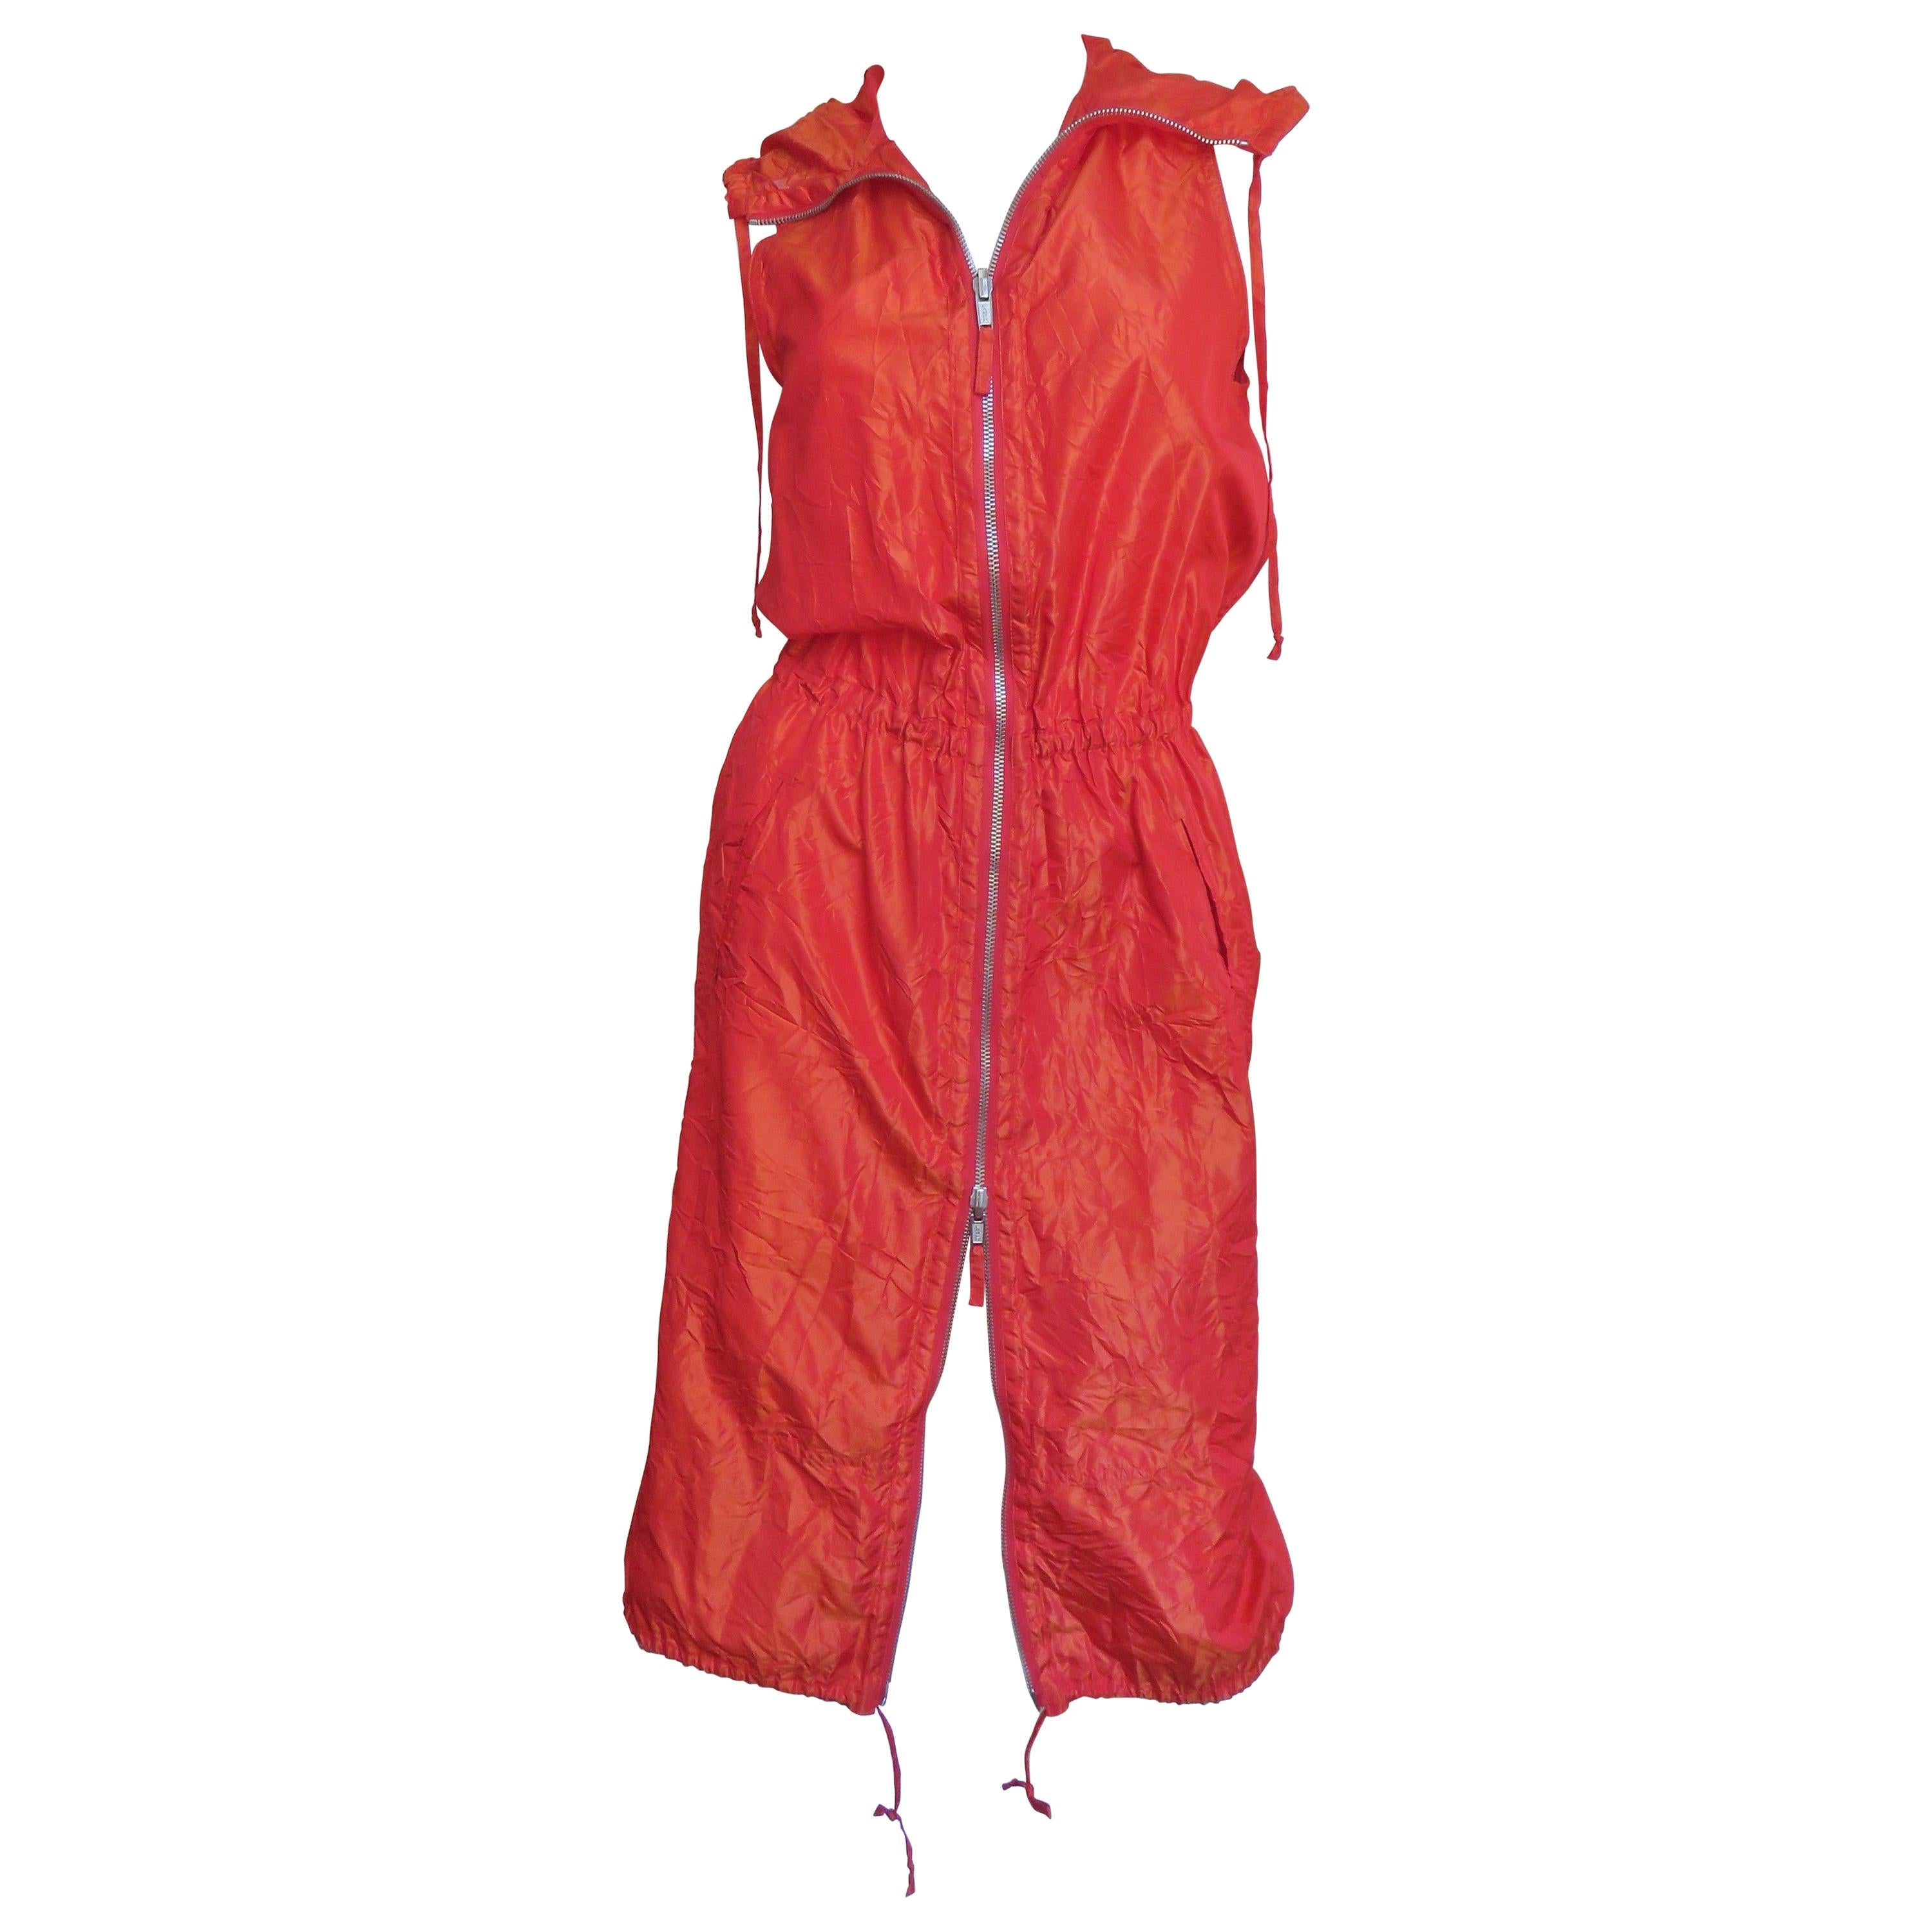  Jean Paul Gaultier Convertible Bomber Jacket to Dress